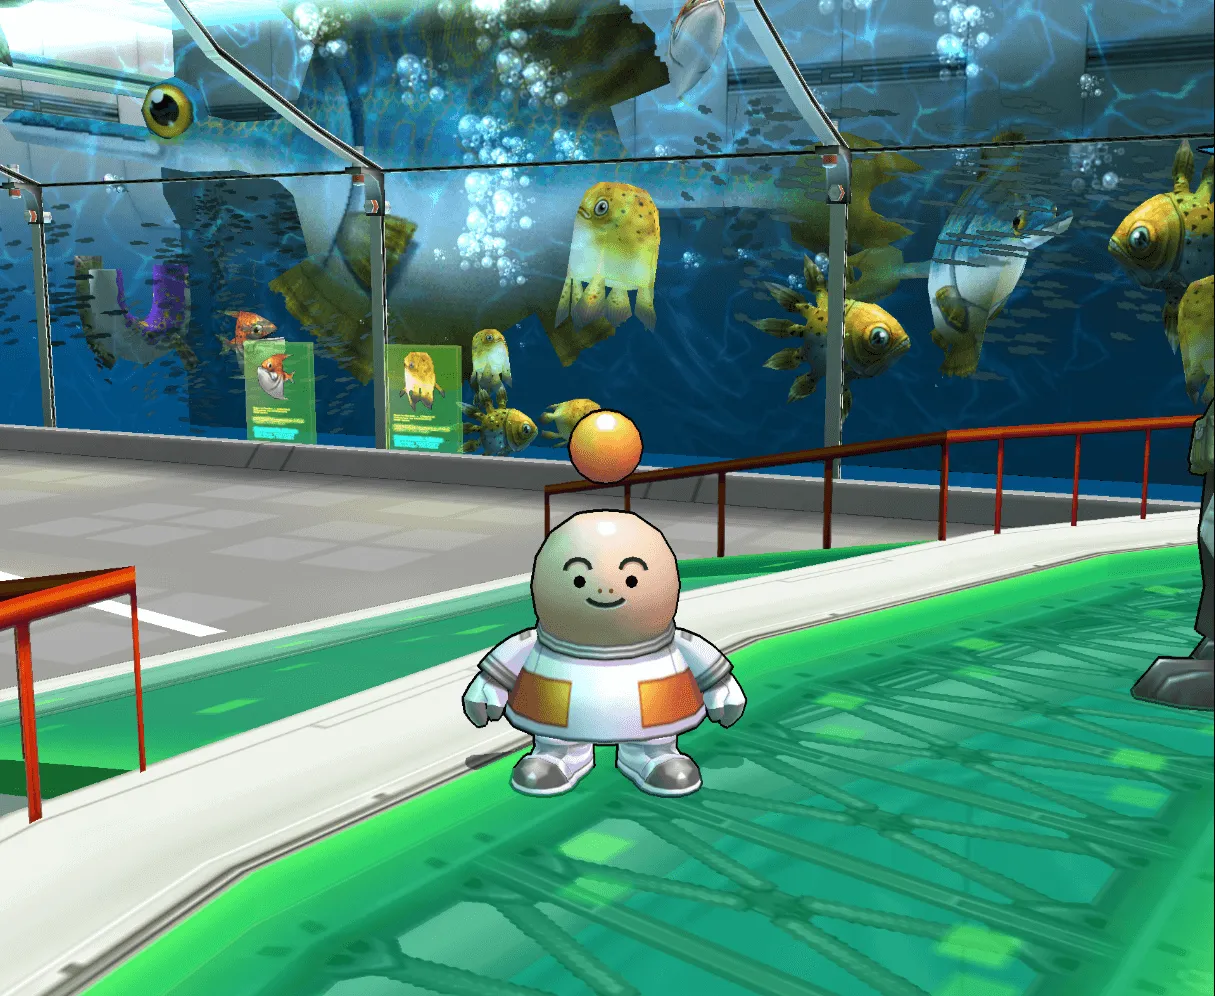 Opoona standing in front of an aquarium.